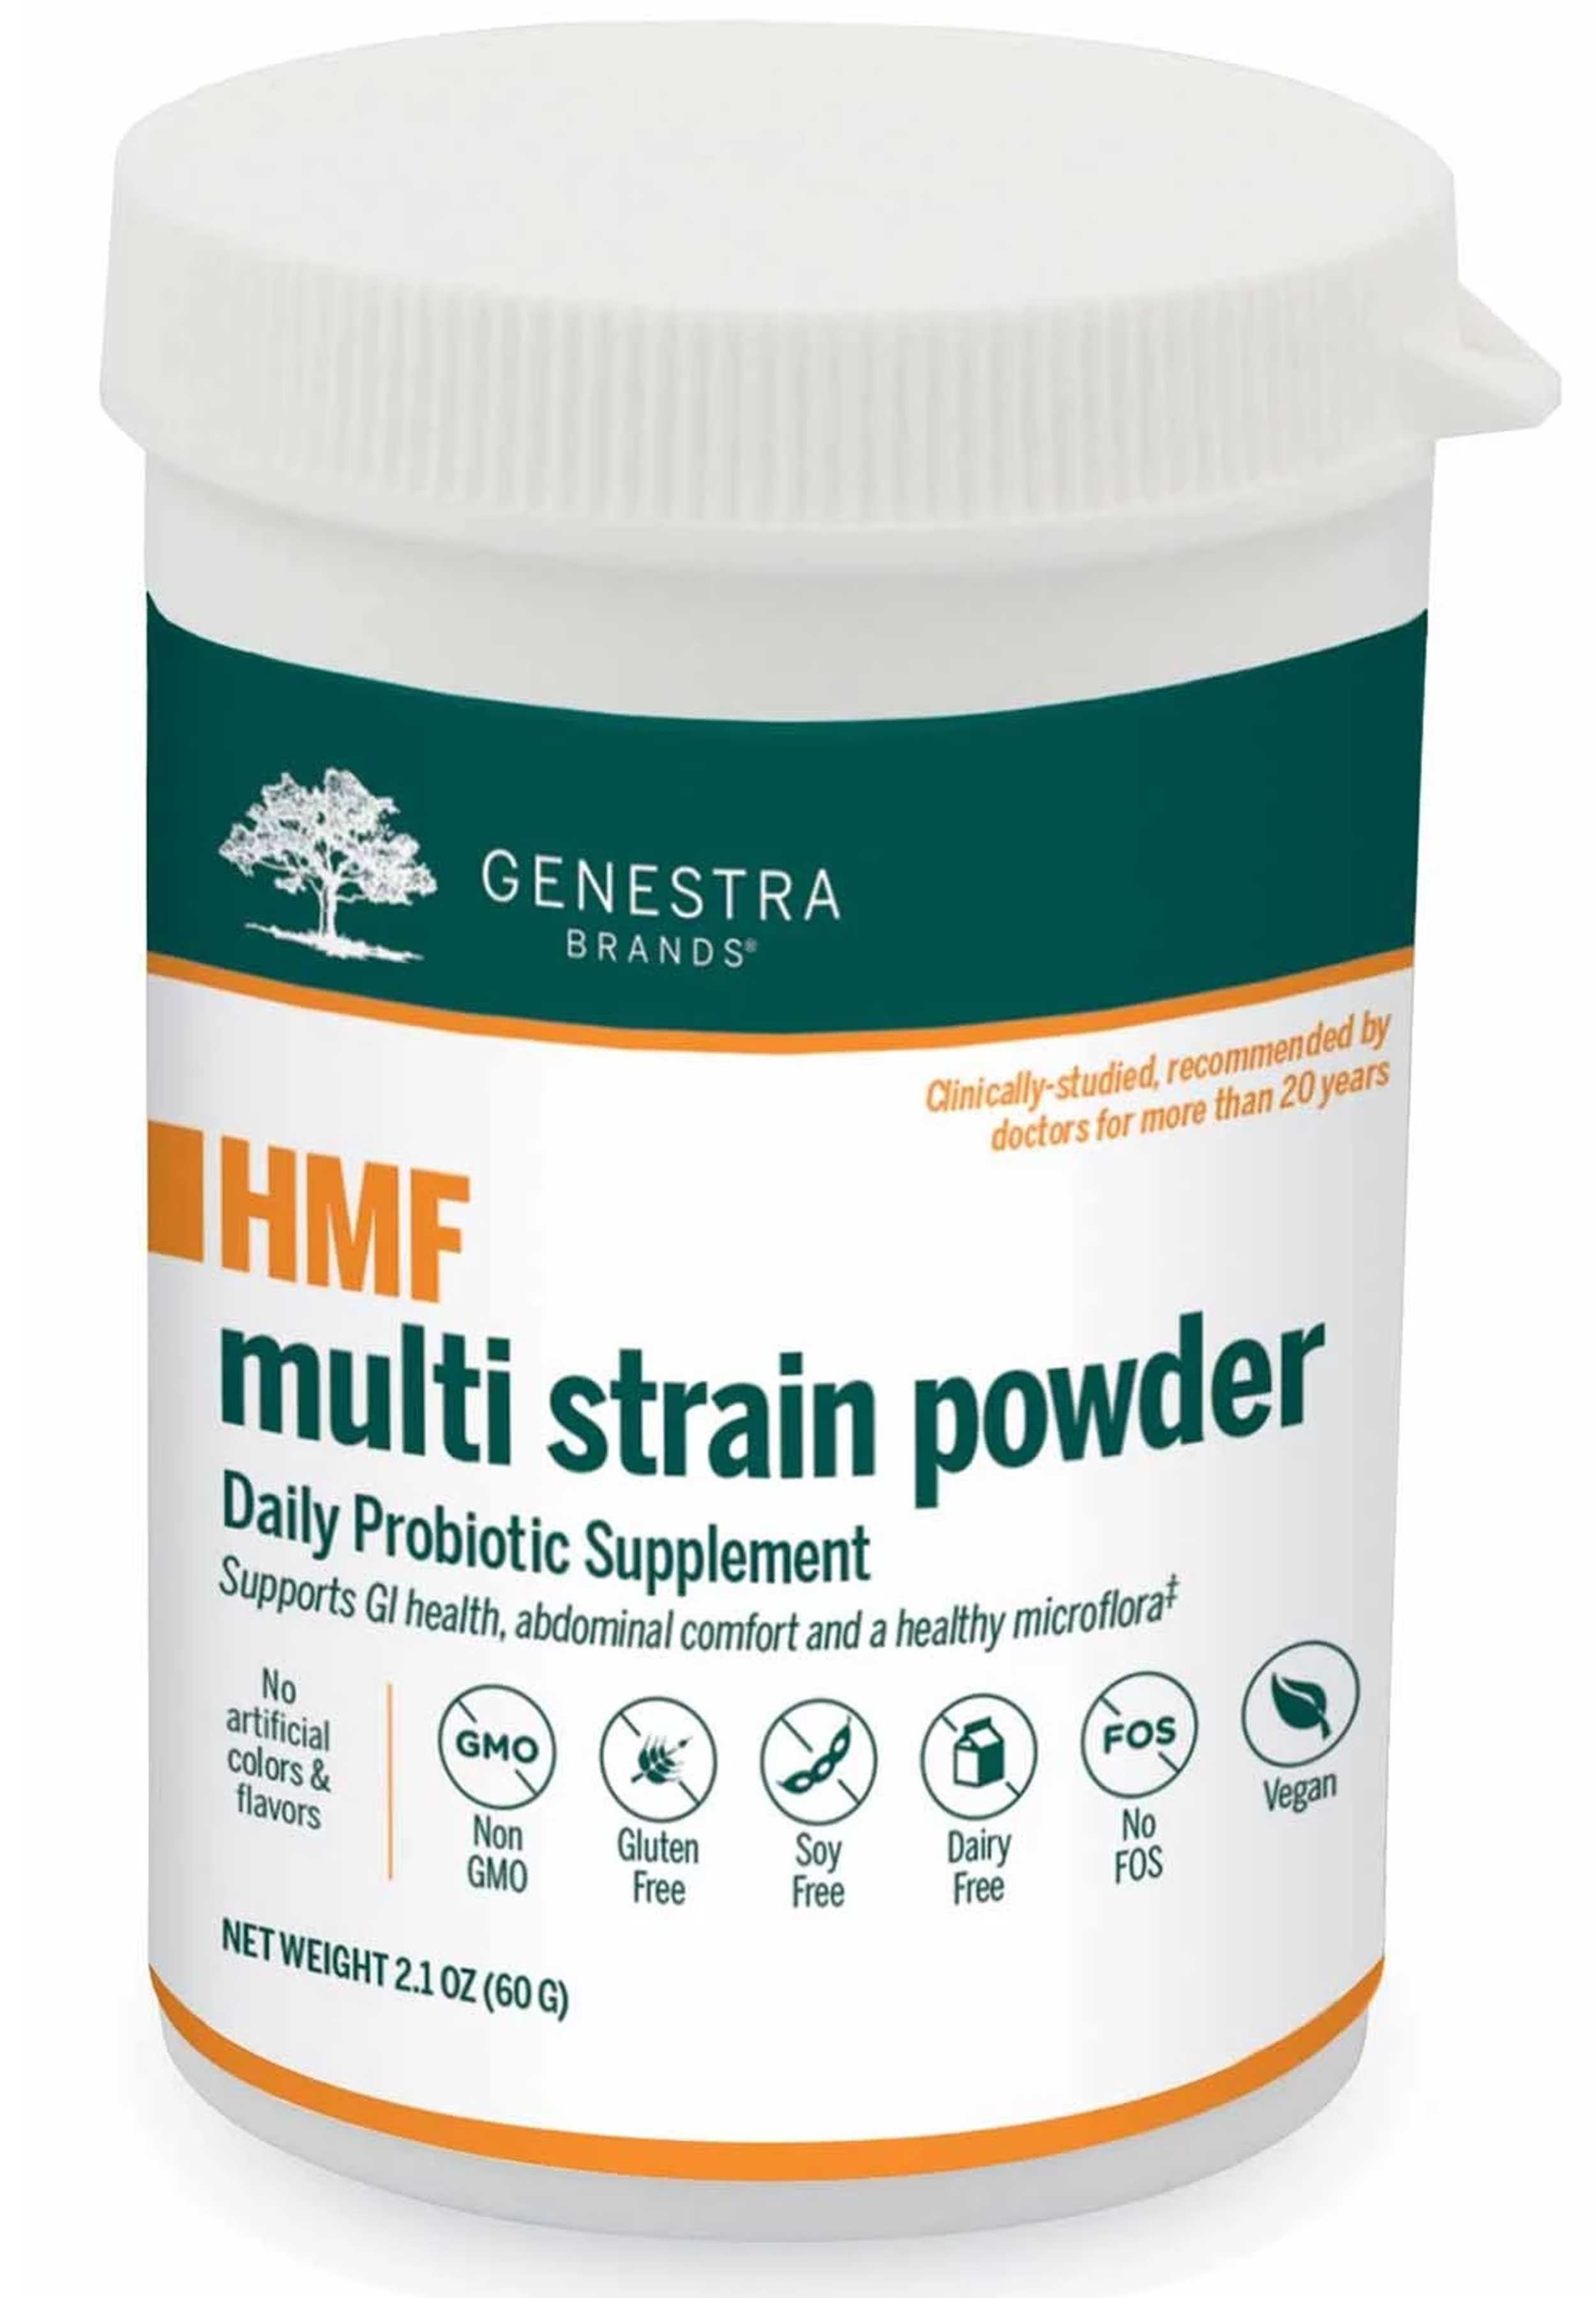 Genestra Brands HMF Multi Strain Powder